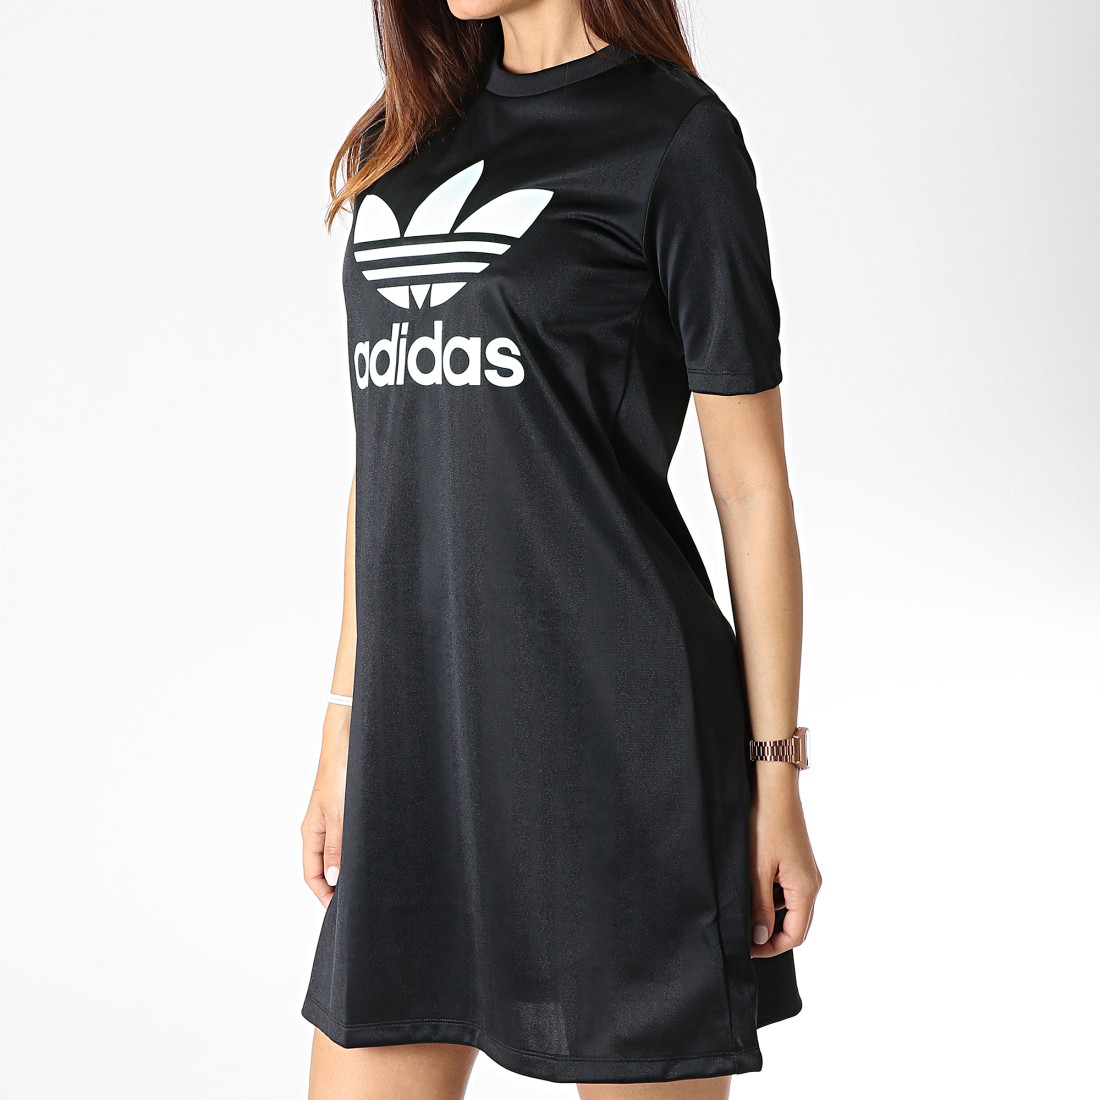 Robe t-shirt 'adidas' - noir - Kiabi - 40.00€